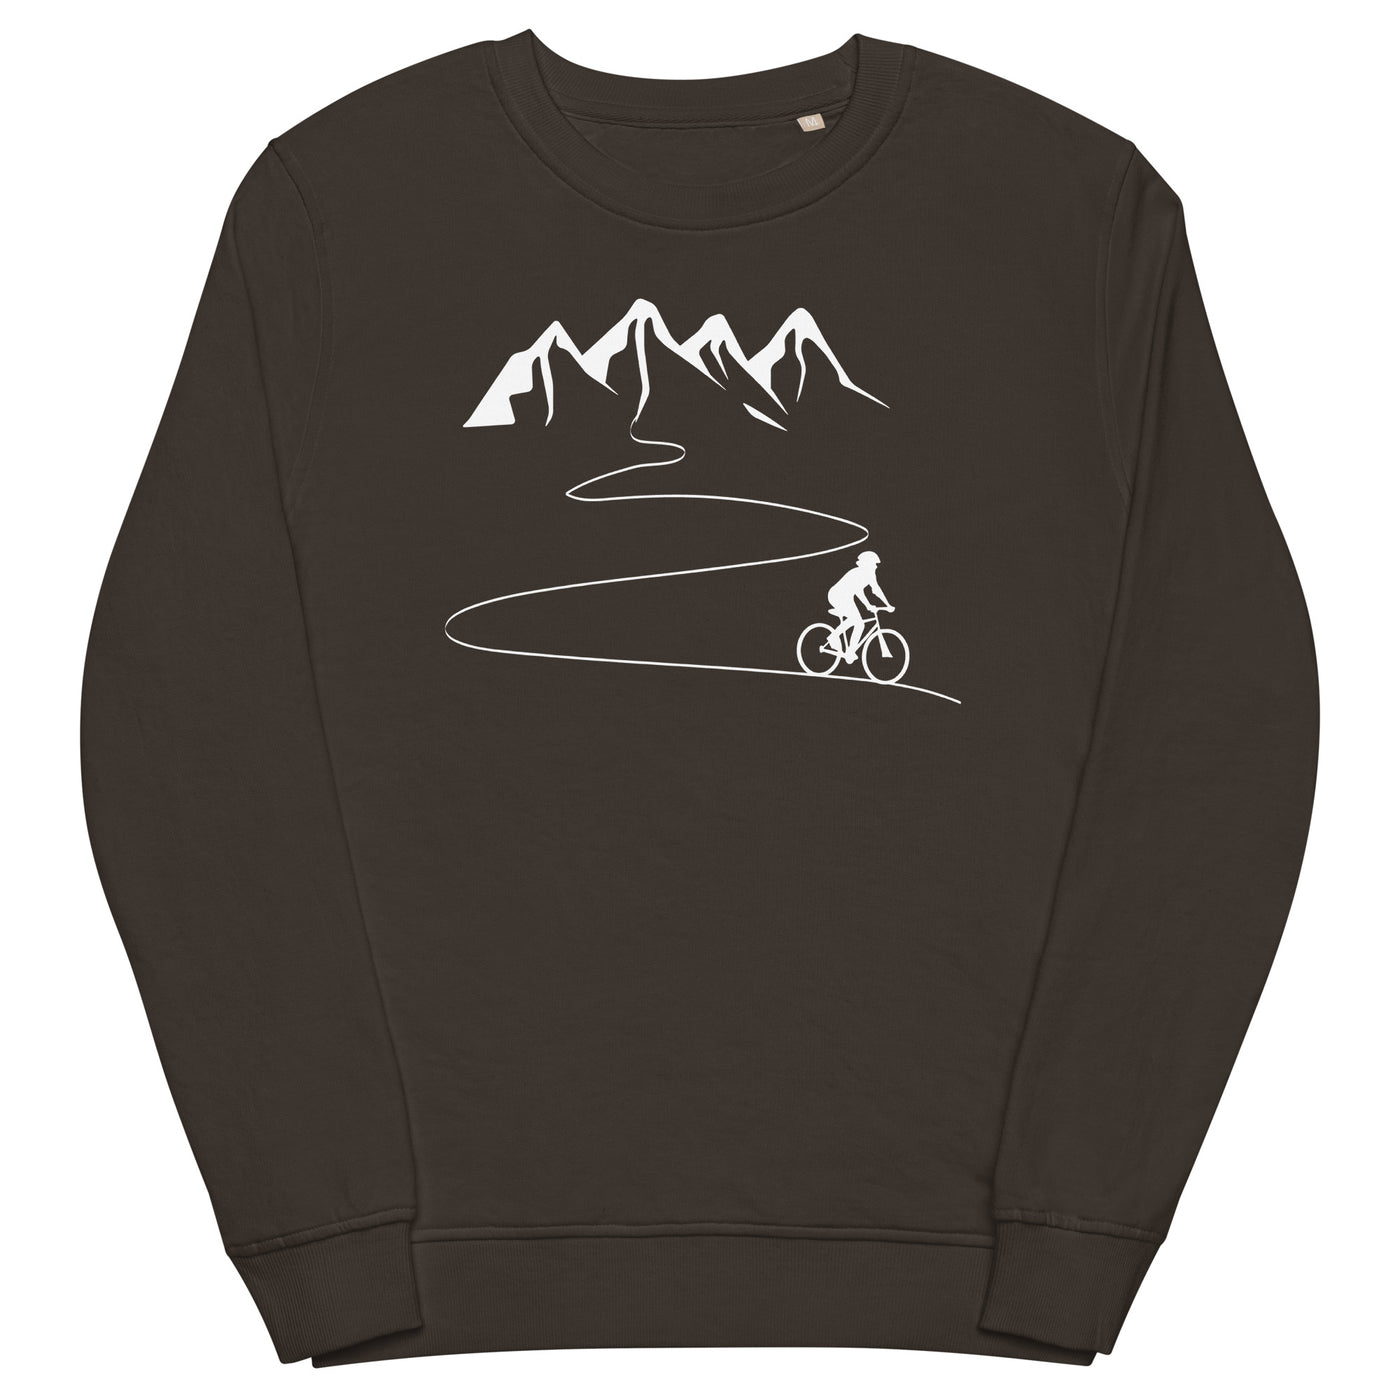 Berge - Kurve Linie - Radfahren - Unisex Premium Organic Sweatshirt fahrrad xxx yyy zzz Deep Charcoal Grey